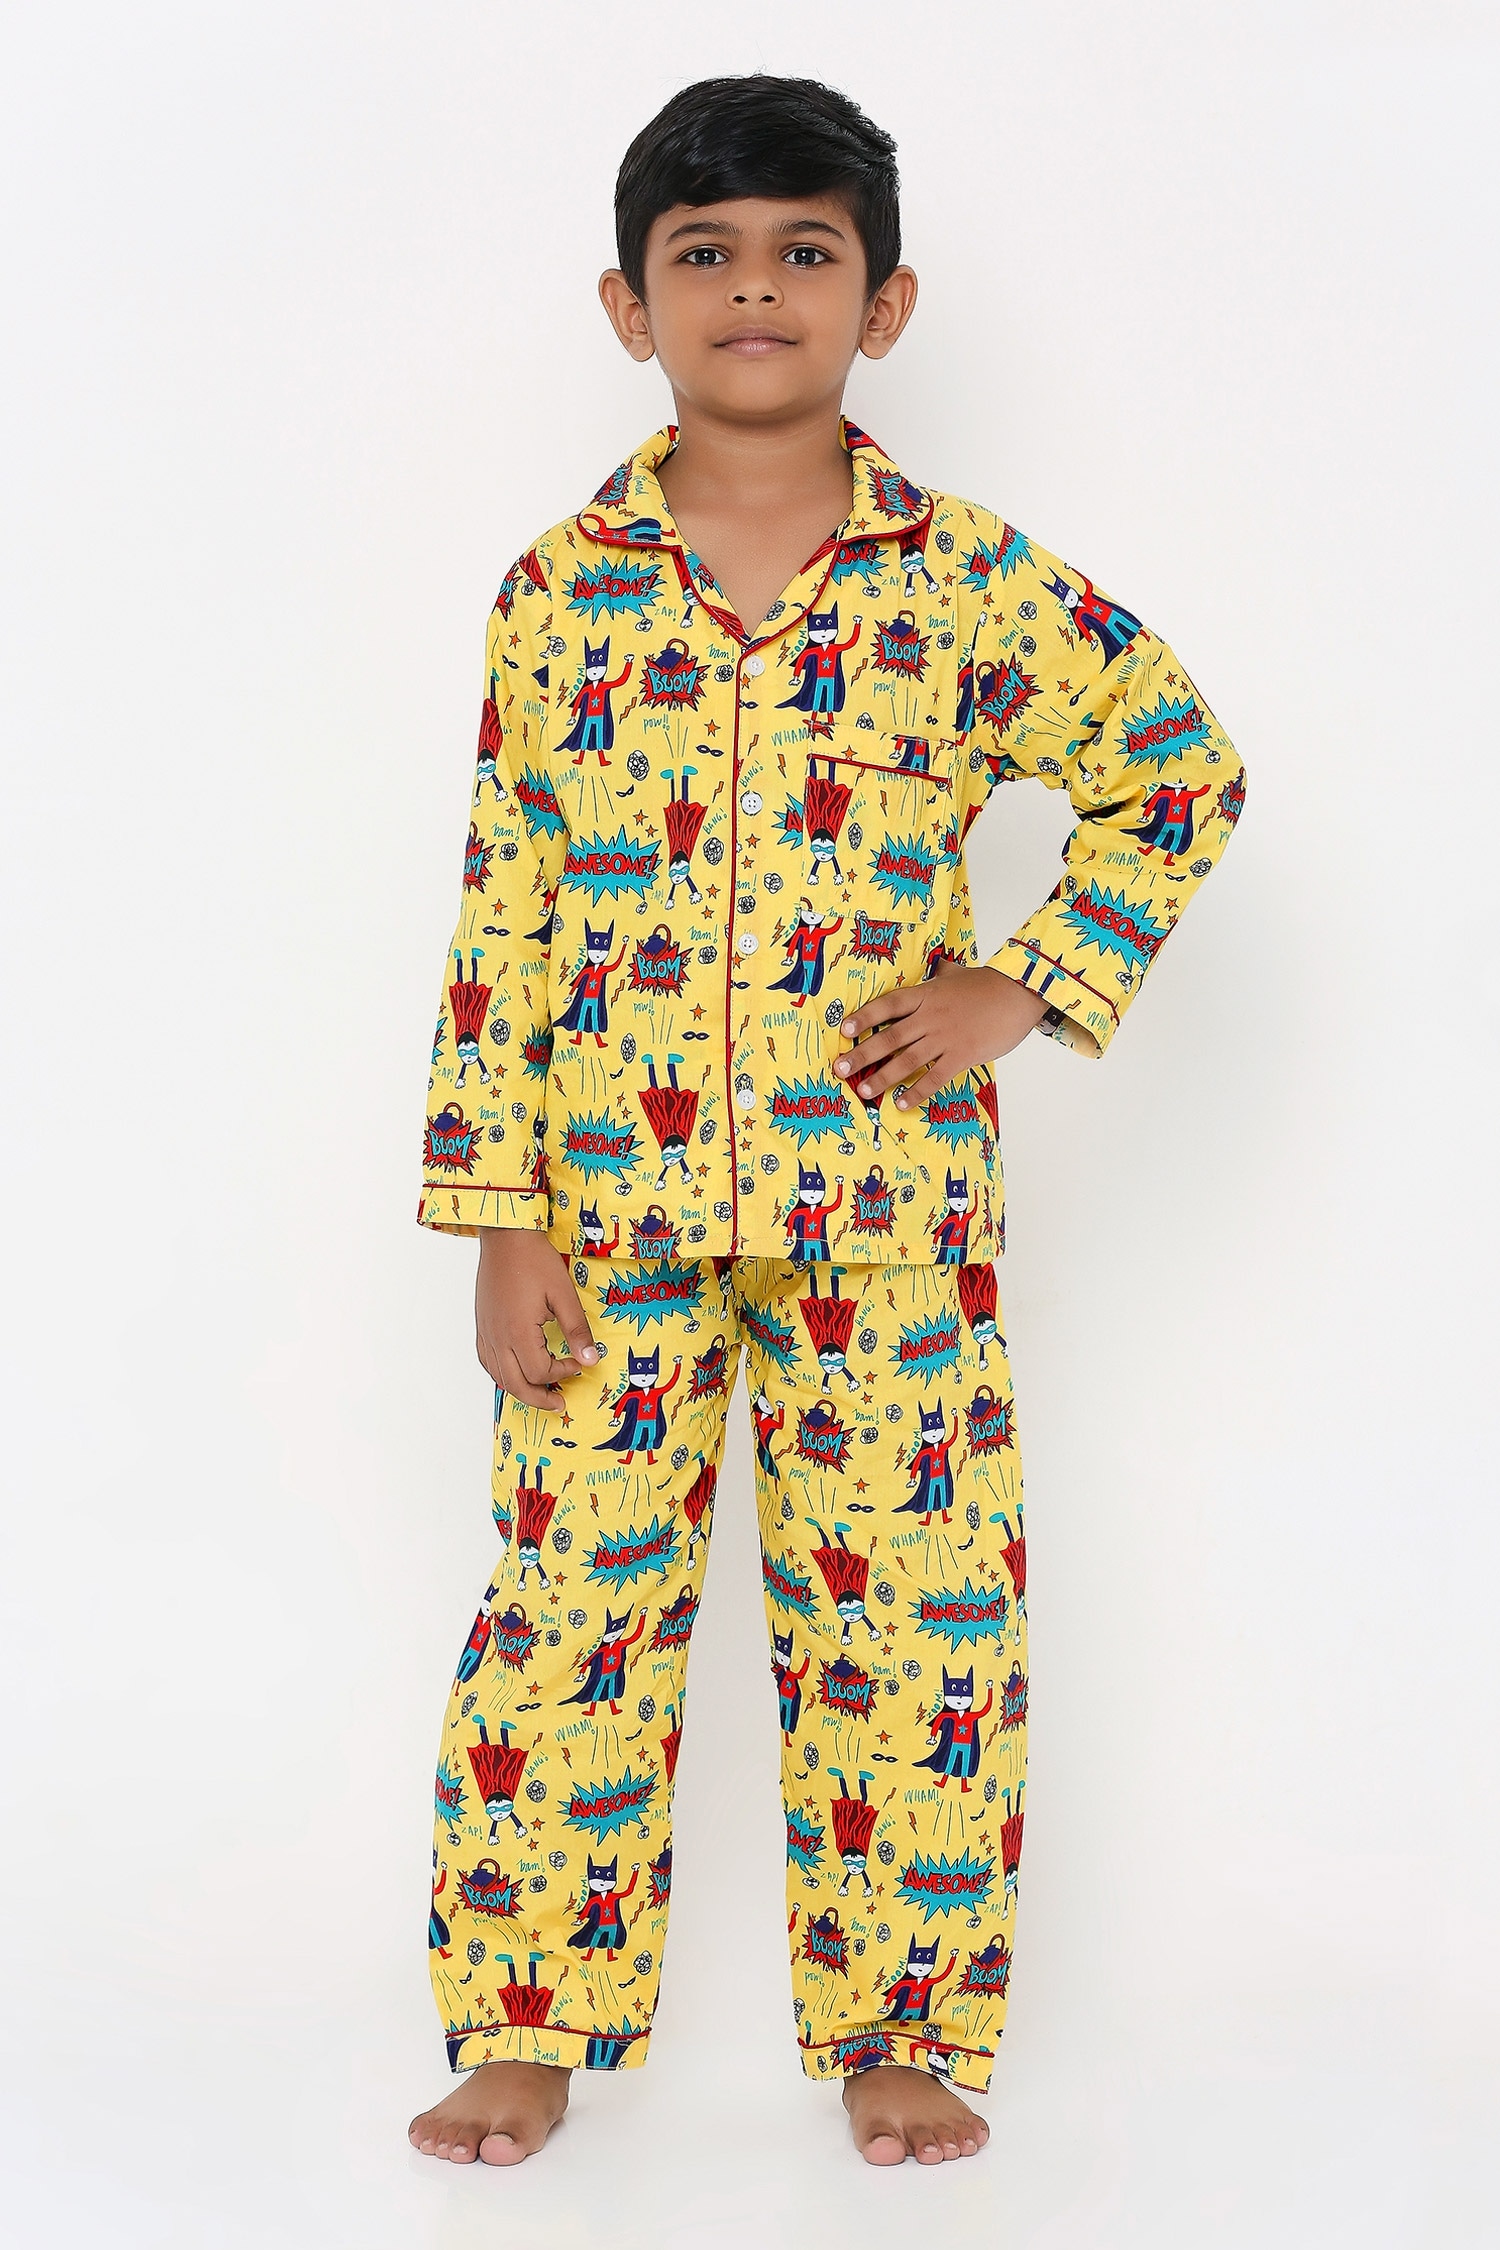 Girls & Boys Night Suits & Nightwear Online for all ages | Kids nightwear, Night  suit, Dress for girl child